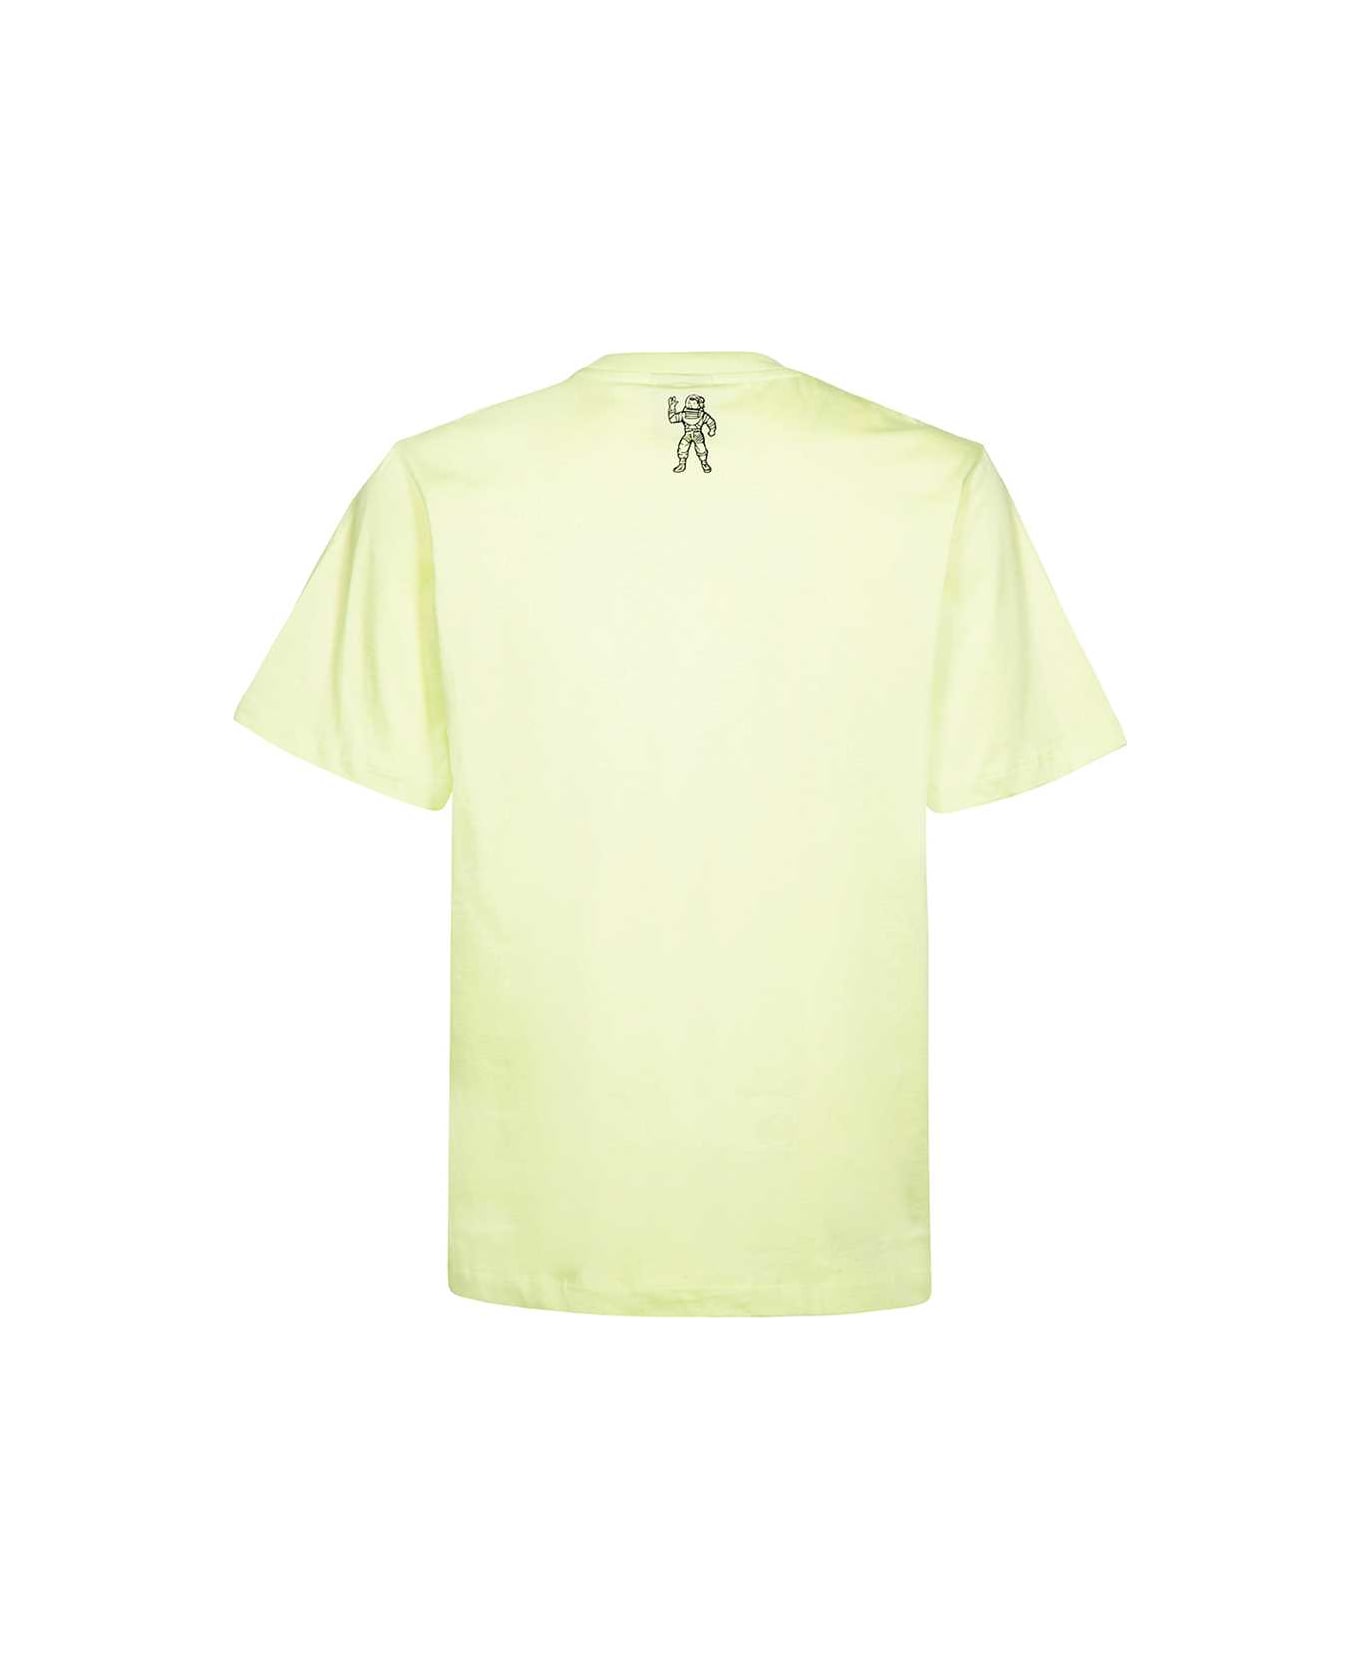 Billionaire Boys Club Cotton T-shirt - green シャツ